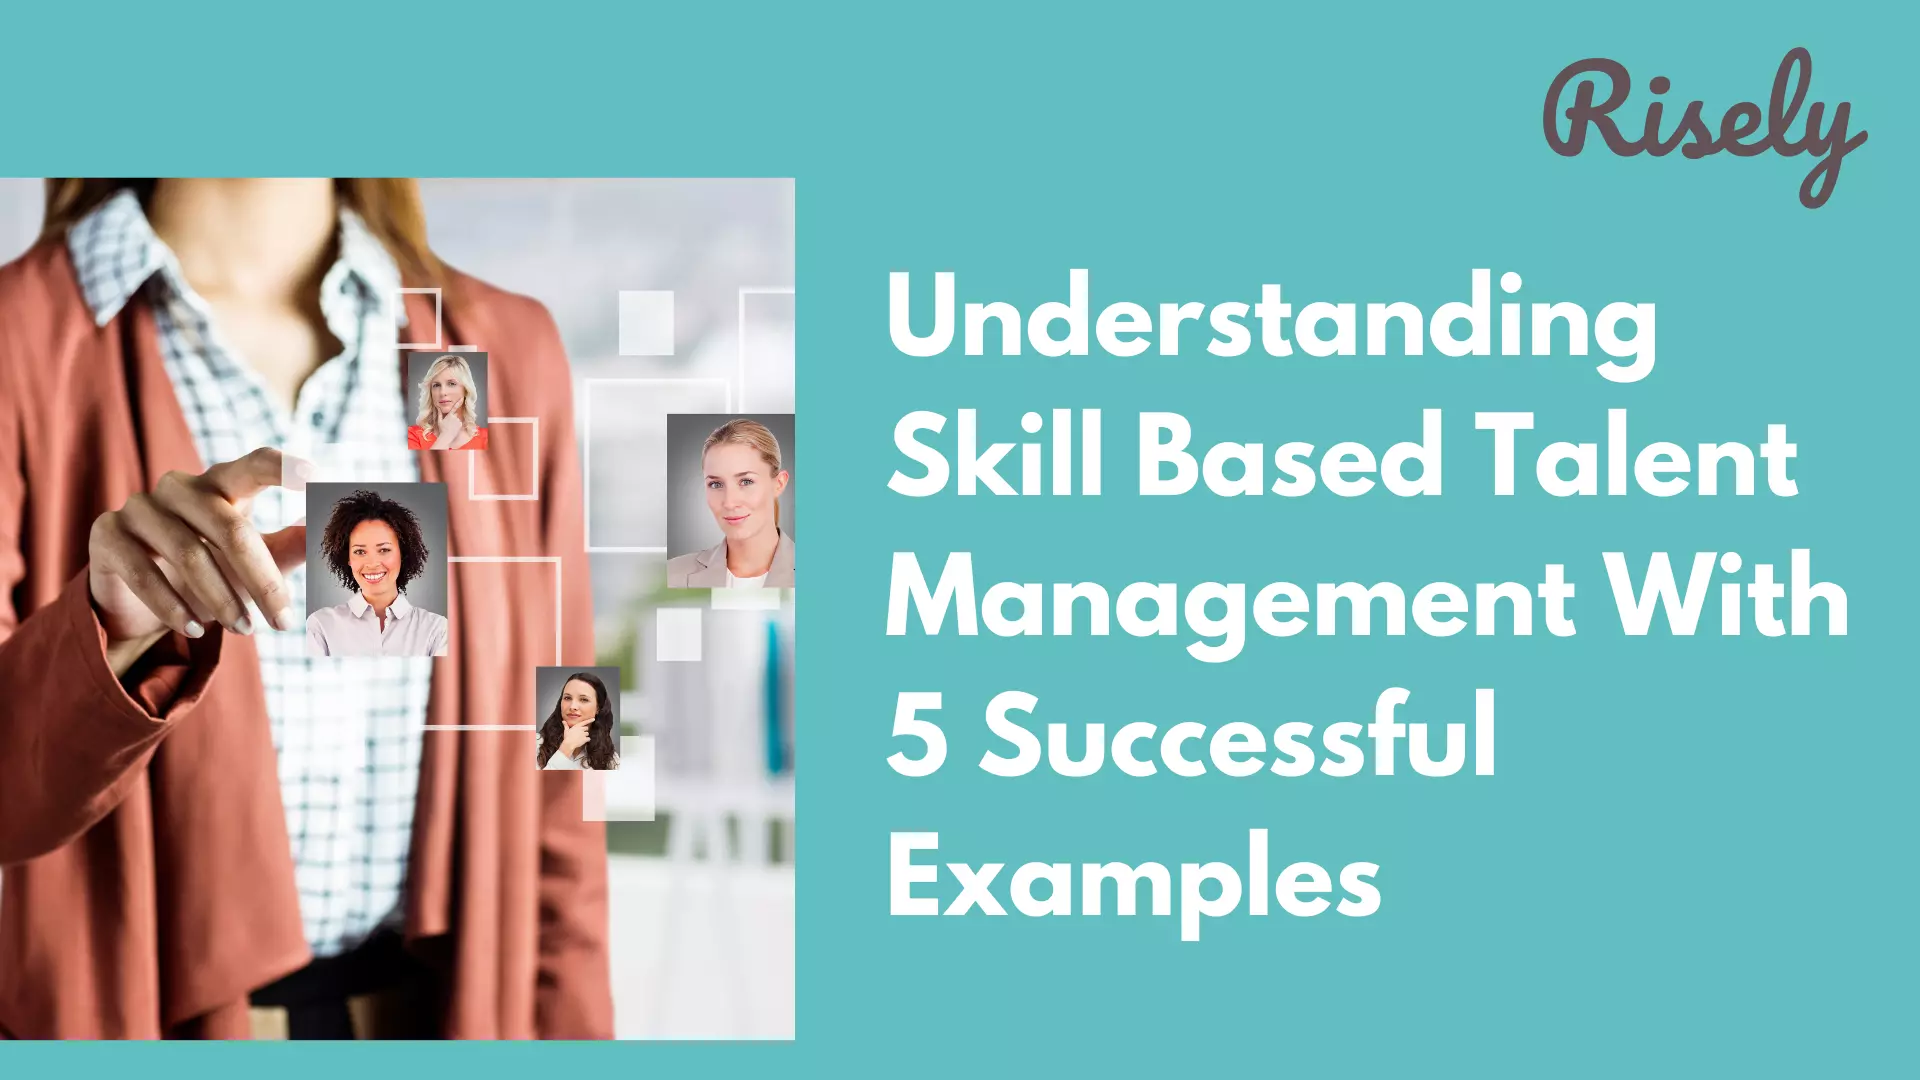 Skill based talent management